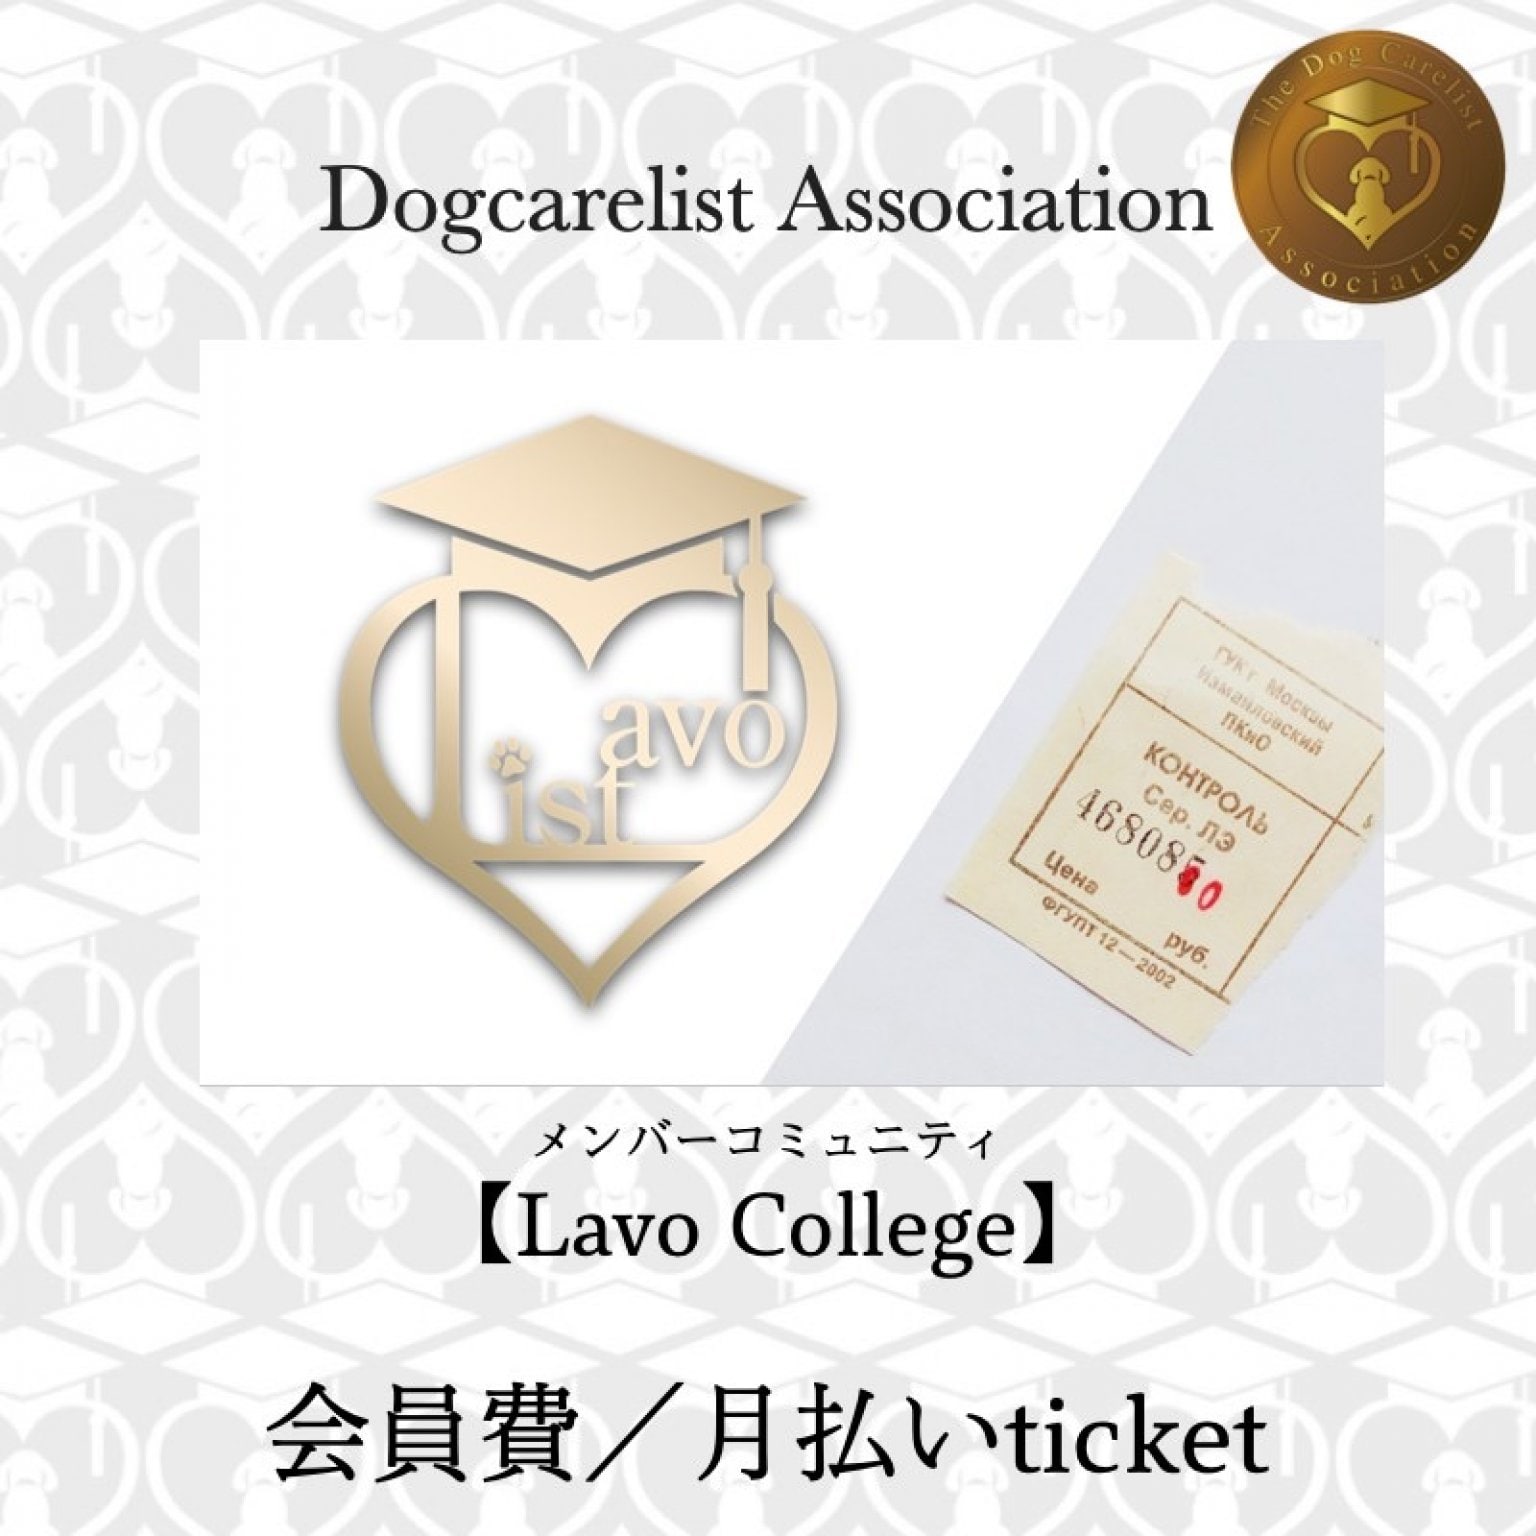 【Lavo College】ドッグケアリスト協会Lavolistメンバー会員費